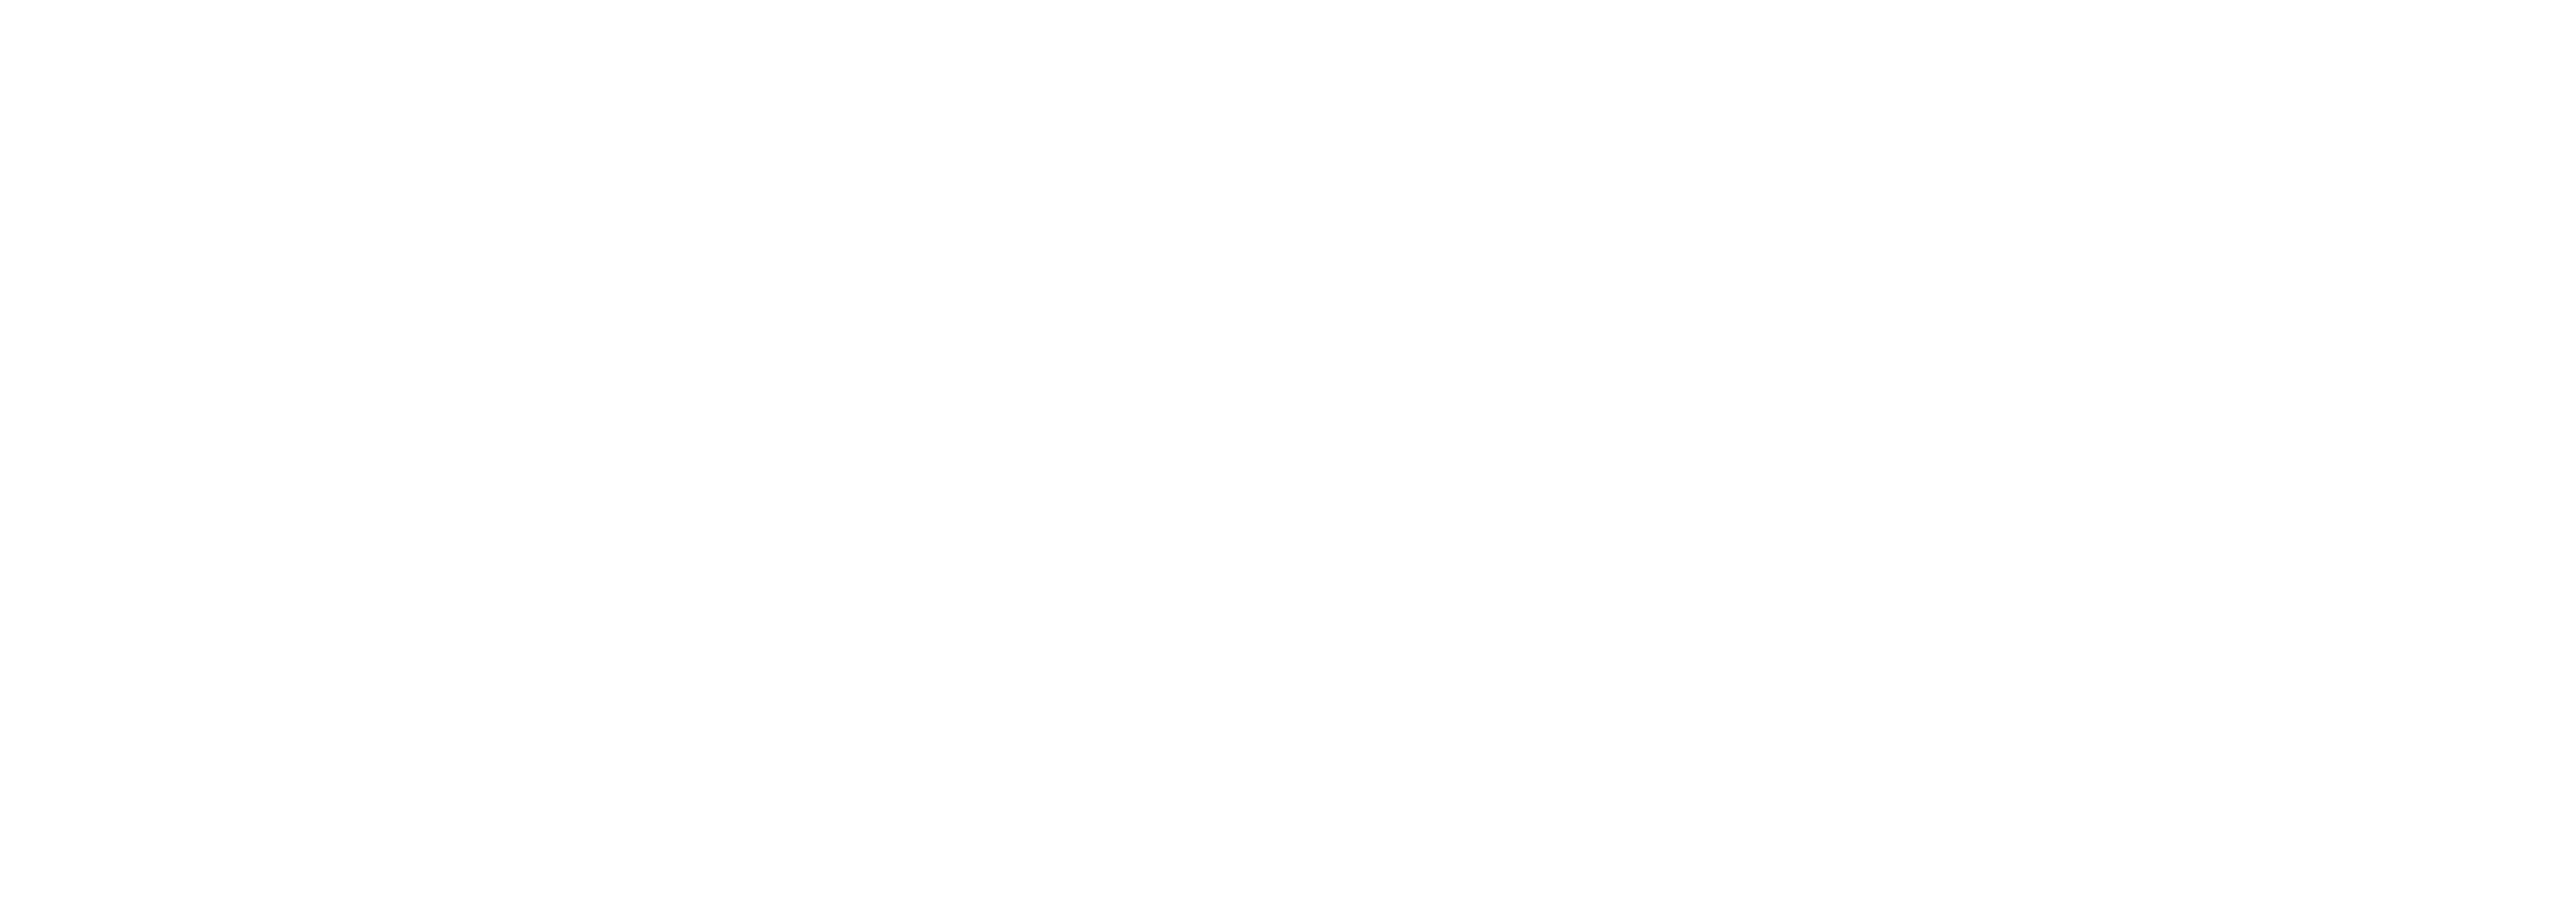 FINANCIAL STATEMENTS 2018-19 - Big Brothers Big Sisters of Halton and Hamilton